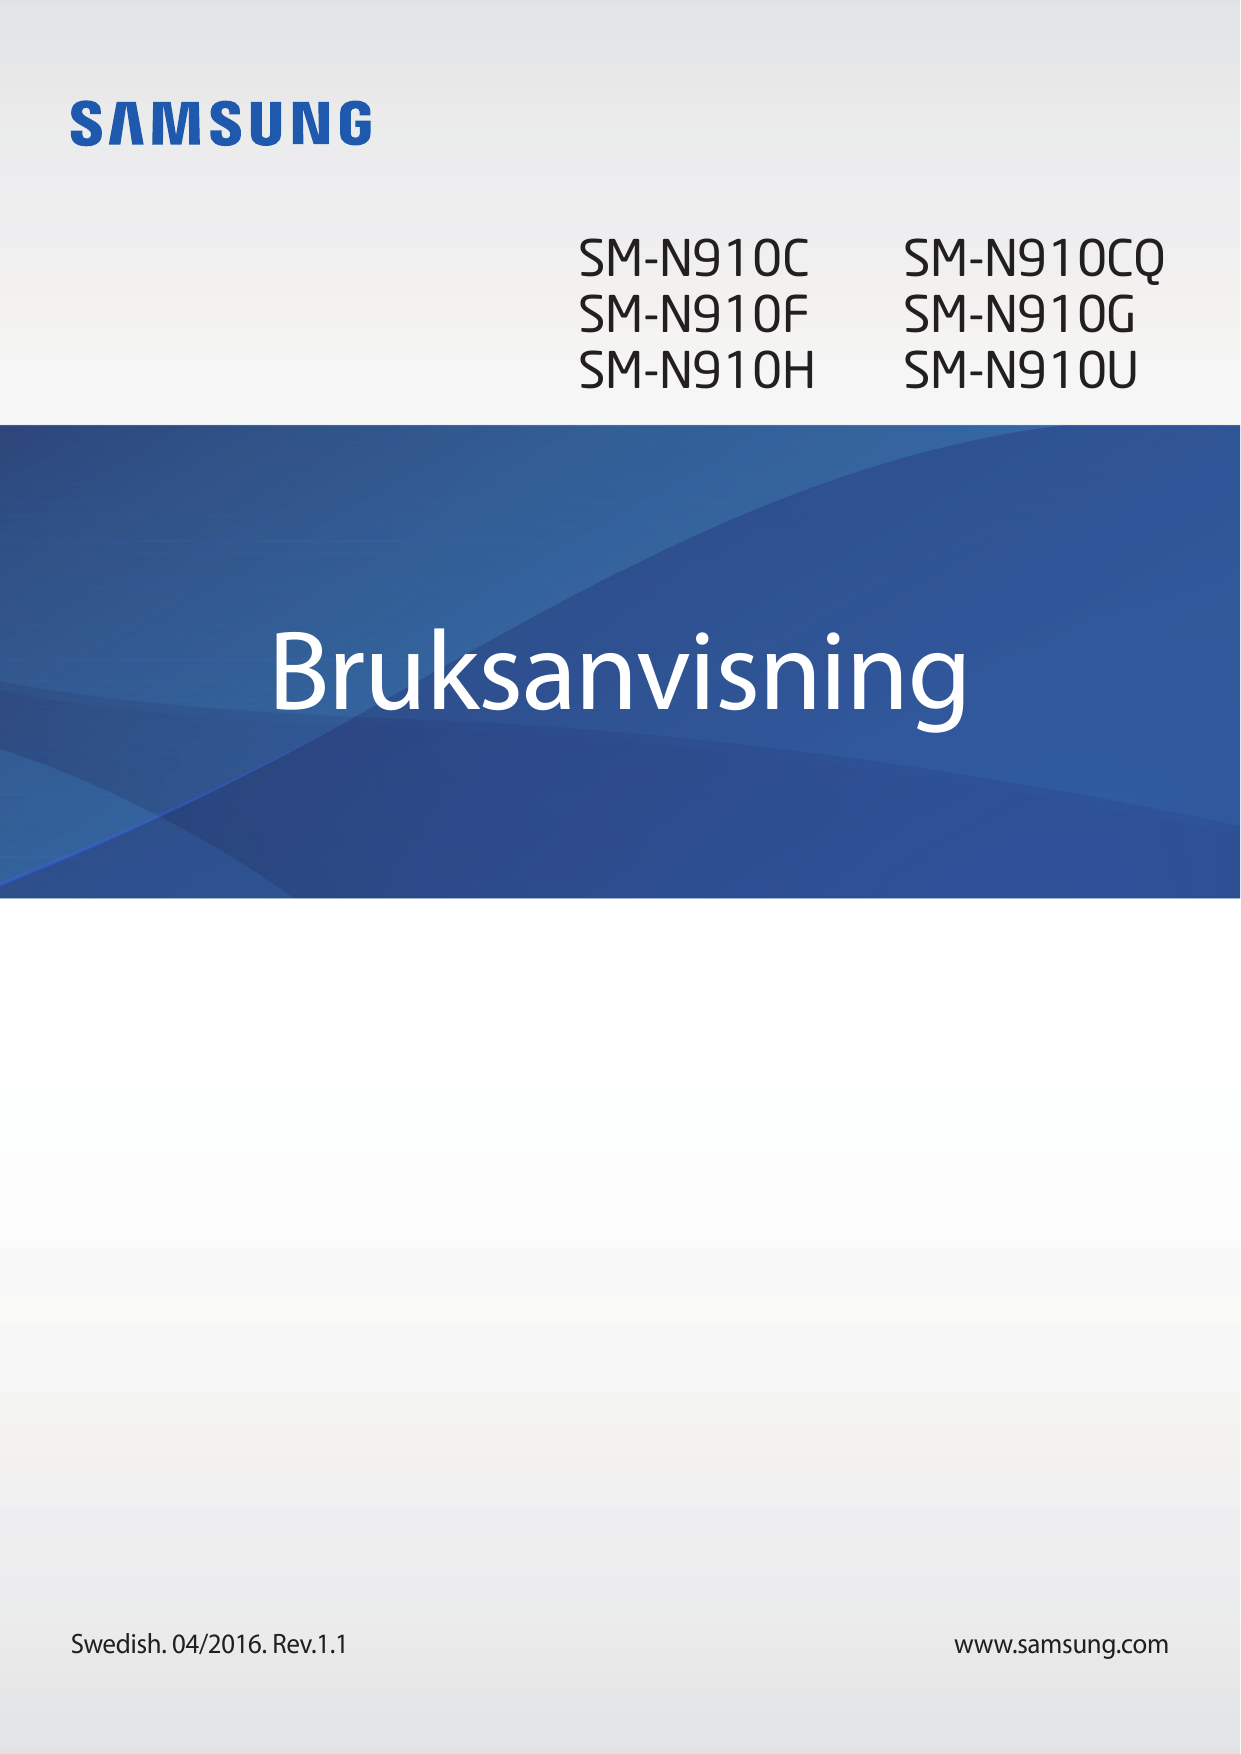 SM-N910CSM-N910FSM-N910HSM-N910CQSM-N910GSM-N910UBruksanvisningSwedish. 04/2016. Rev.1.1www.samsung.com